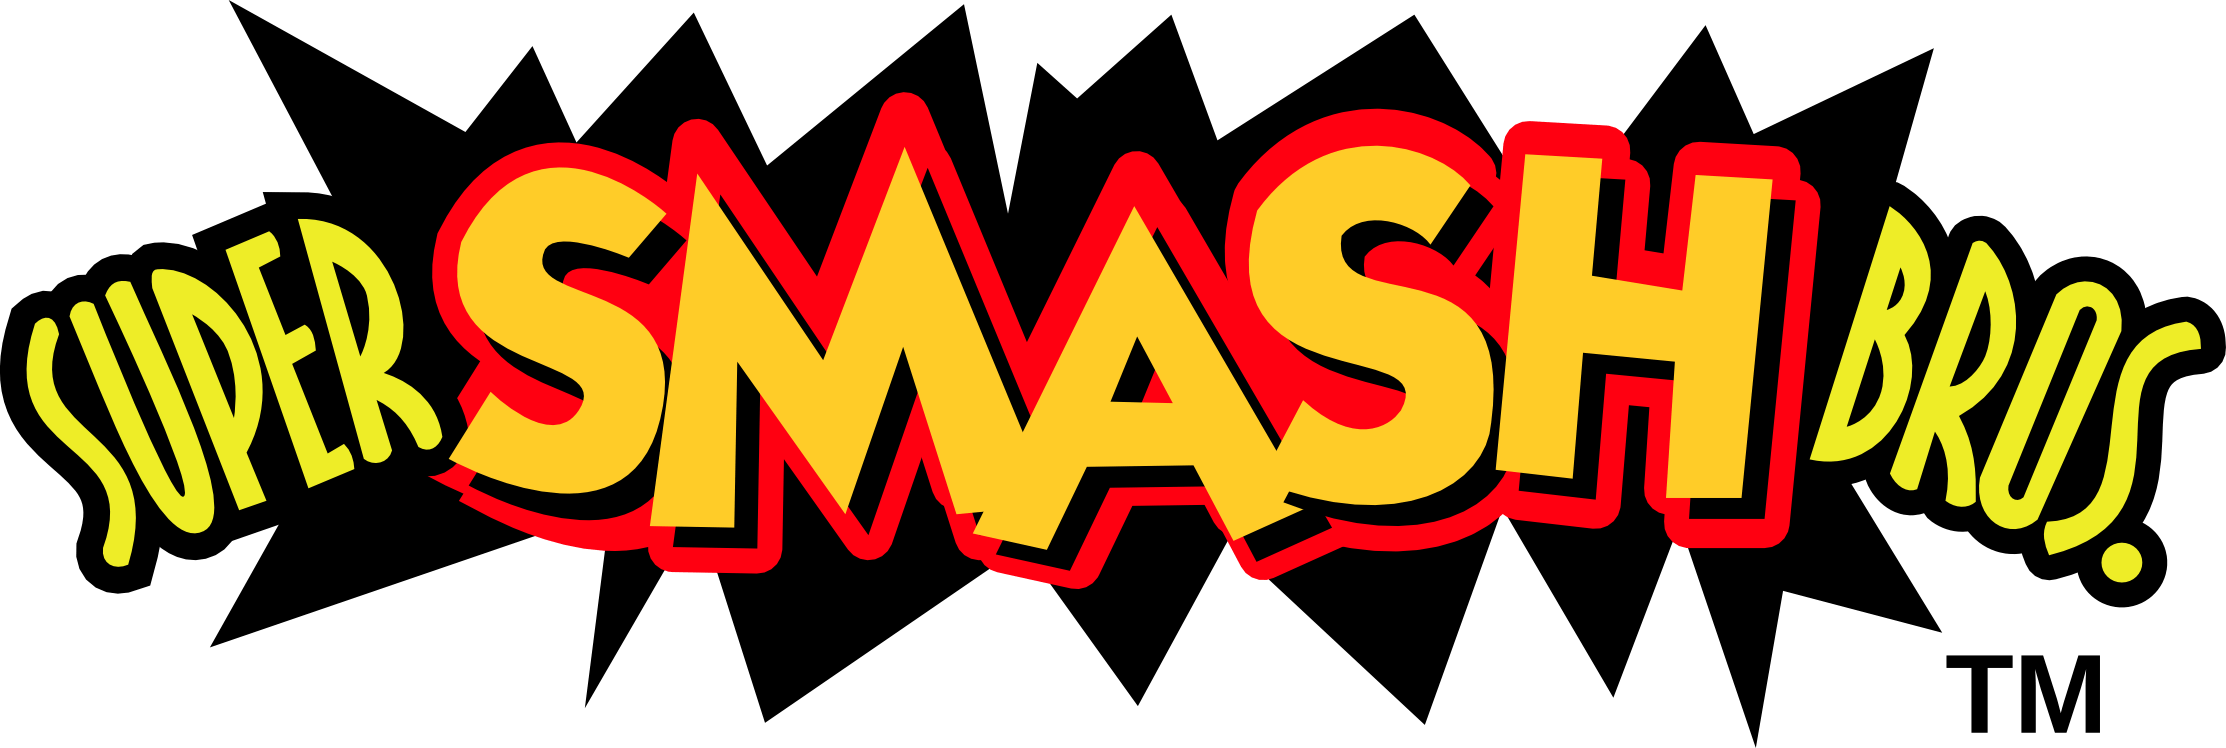 Melee Logo - Super Smash Bros. (N64, Melee) logos | Smashboards